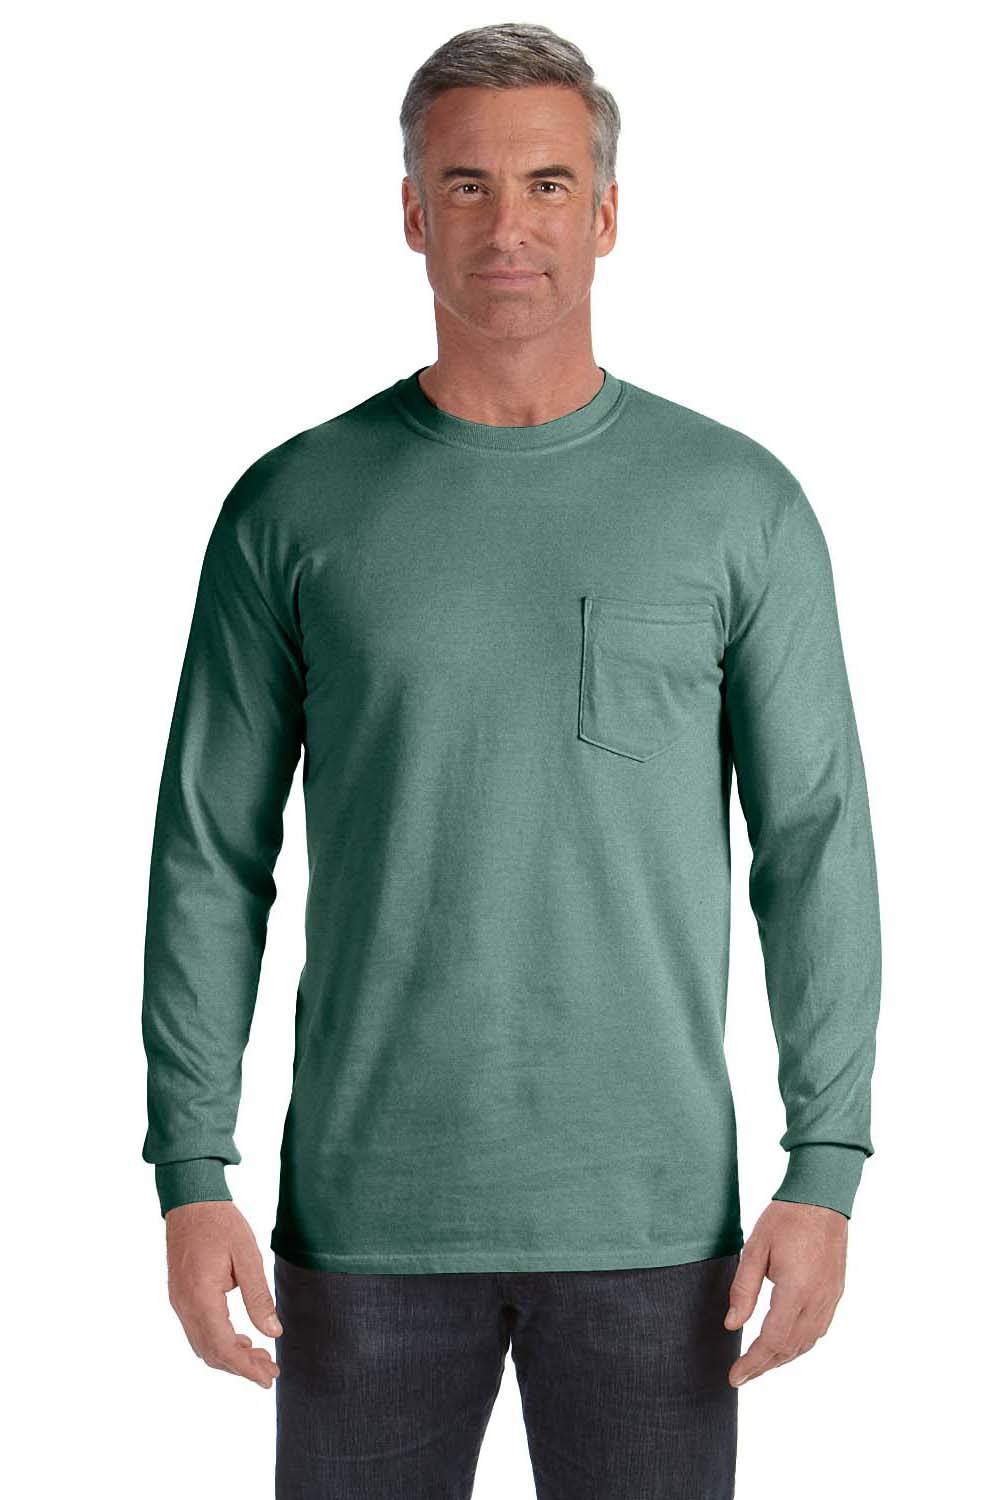 Comfort Colors C4410 Mens Long Sleeve Crewneck T-Shirt w/ Pocket Light Green Front